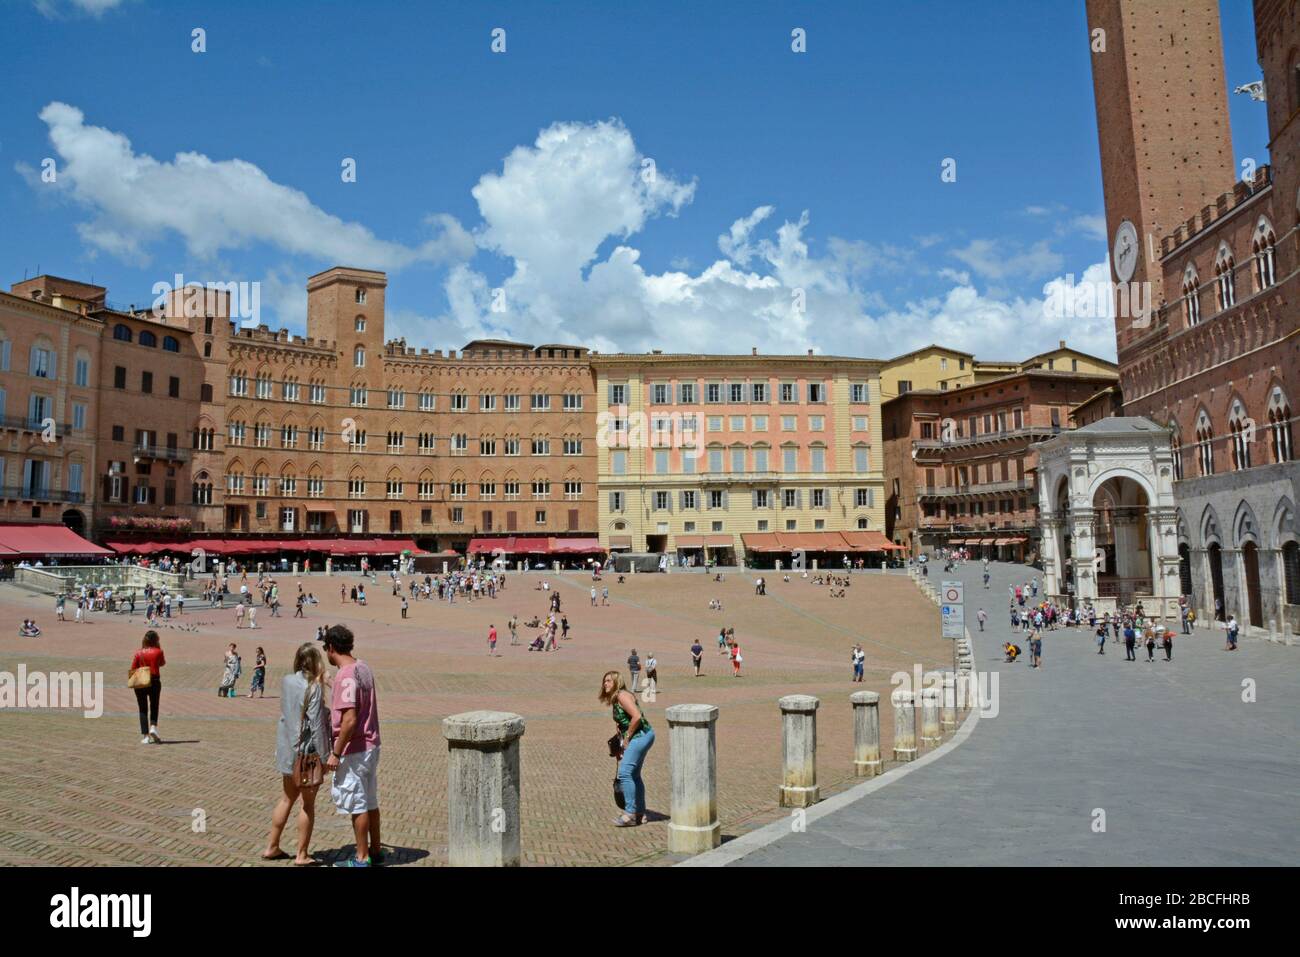 The Piazza del Campo, Siena, ItalyArchitectural Stock Photo